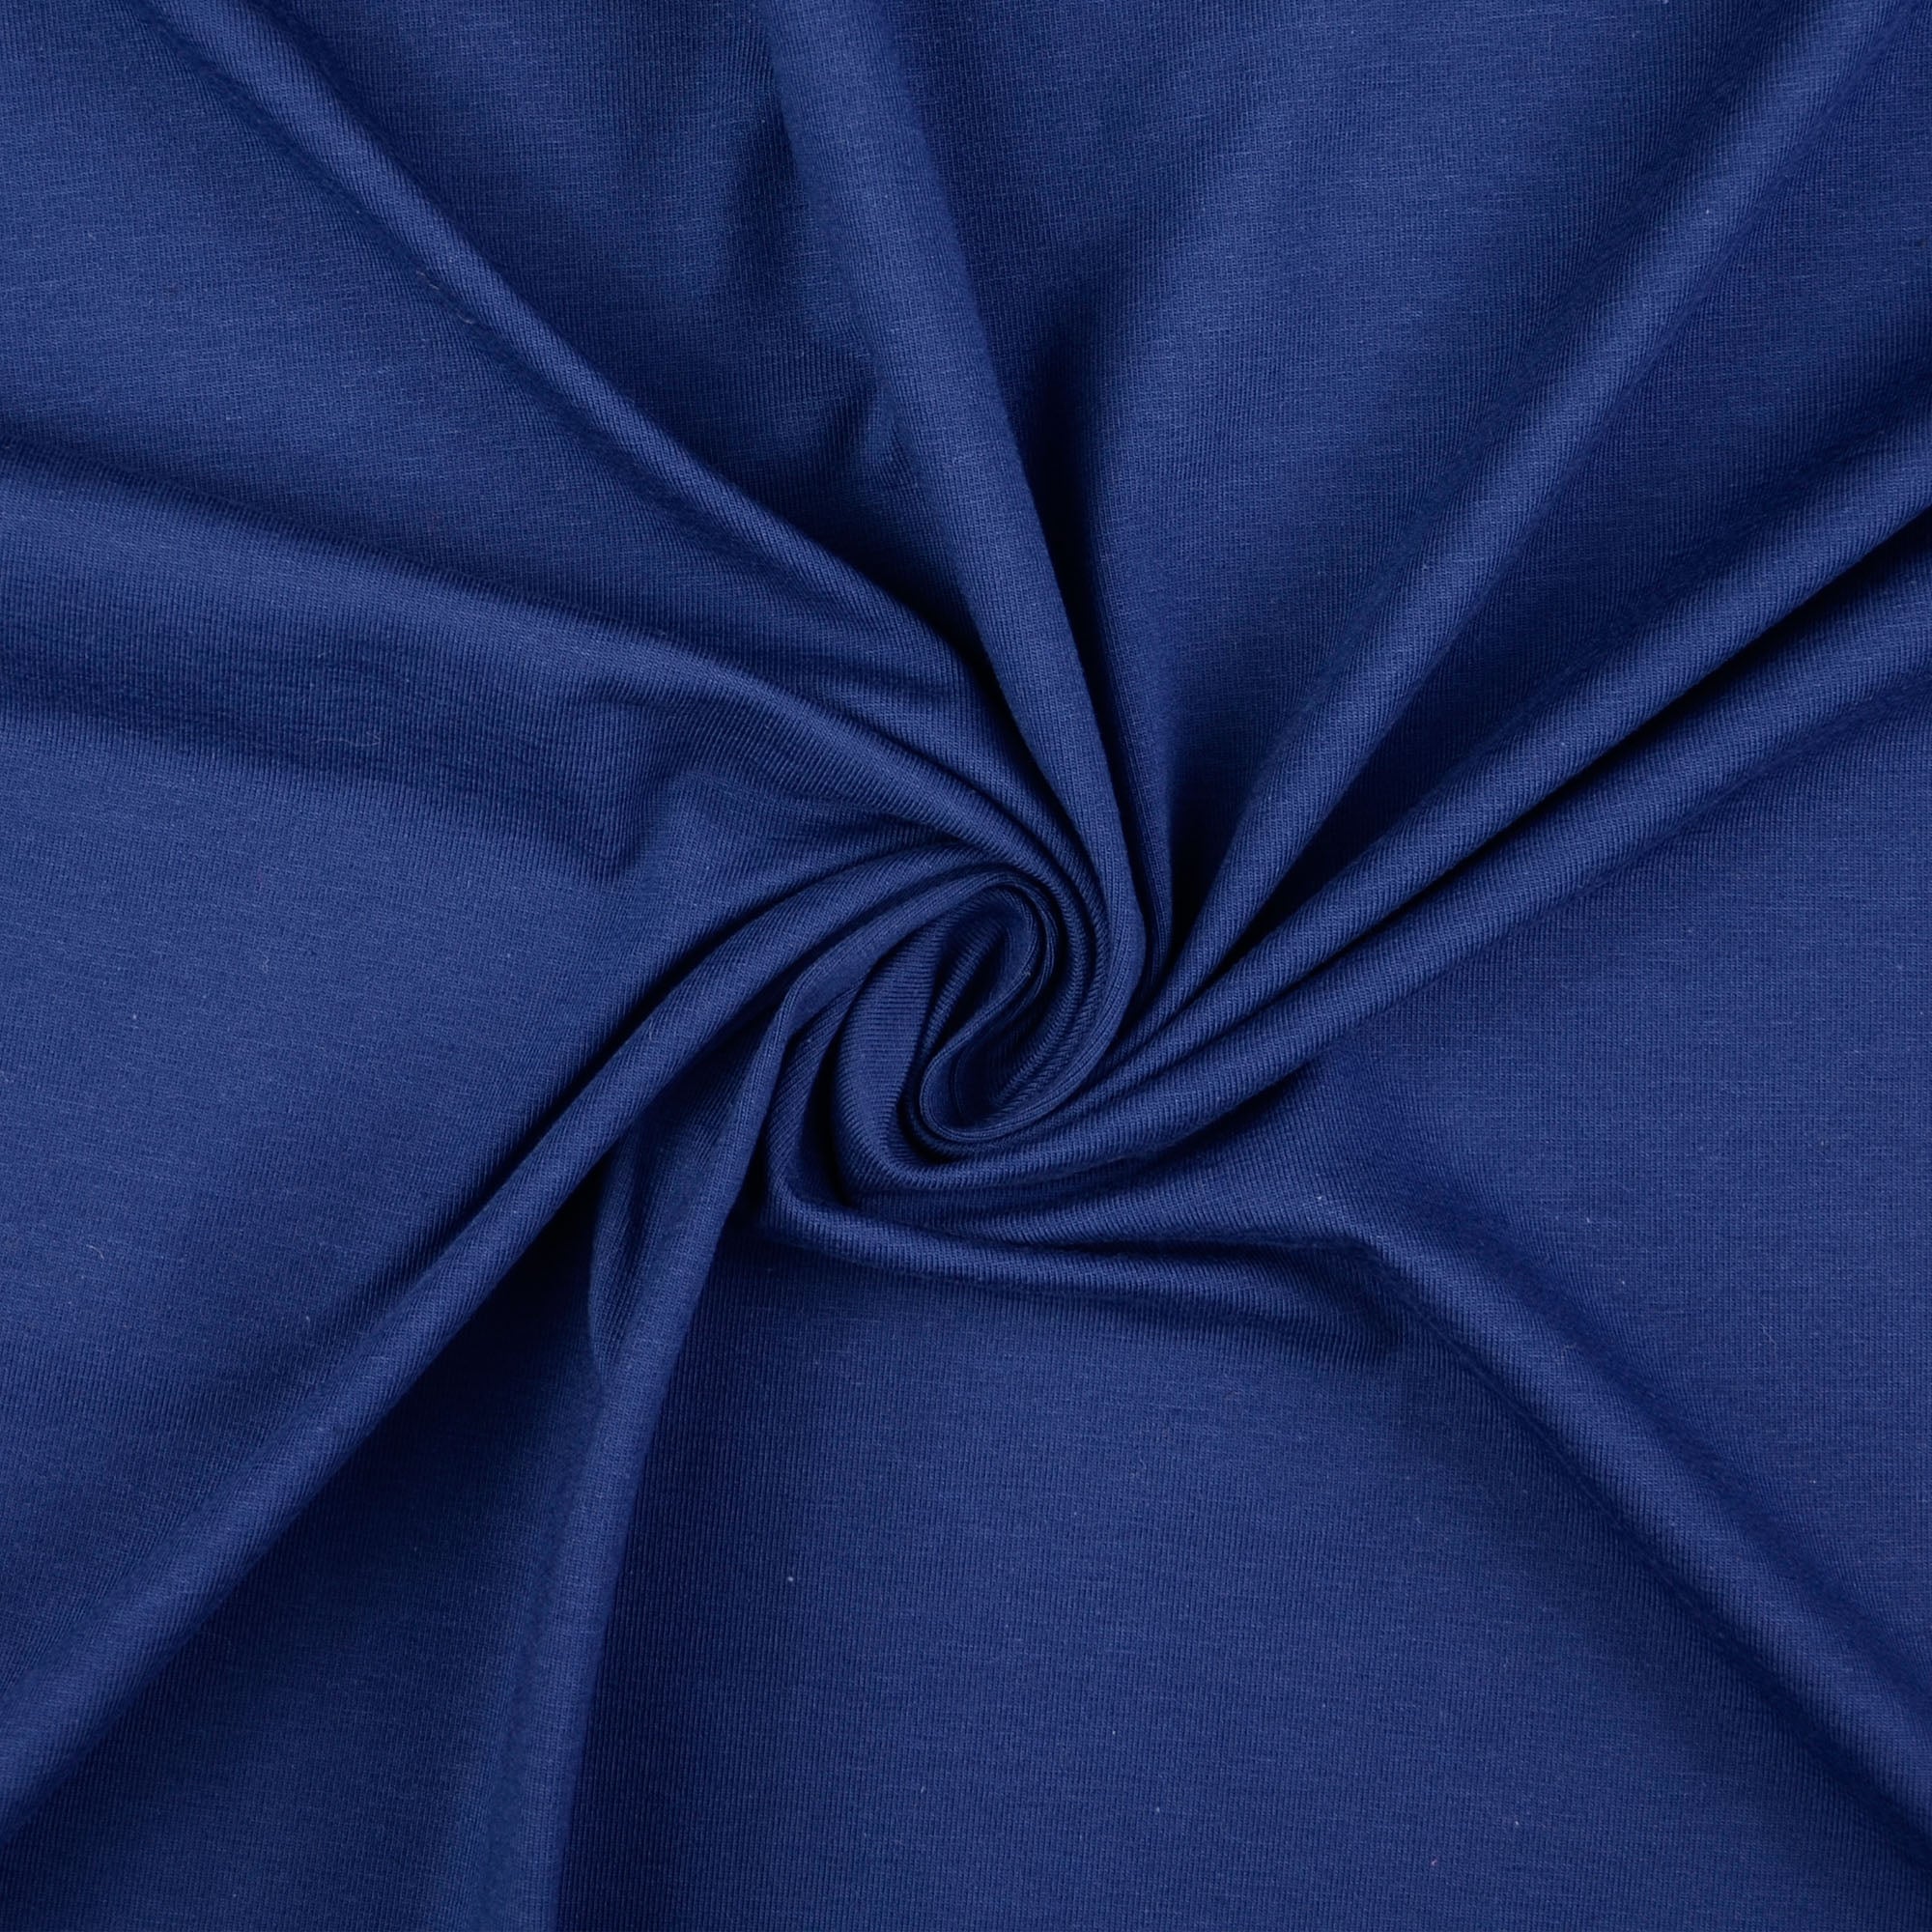 REMNANT 0.77 Metre - Essential Chic Navy Blue Plain Cotton Jersey Fabric